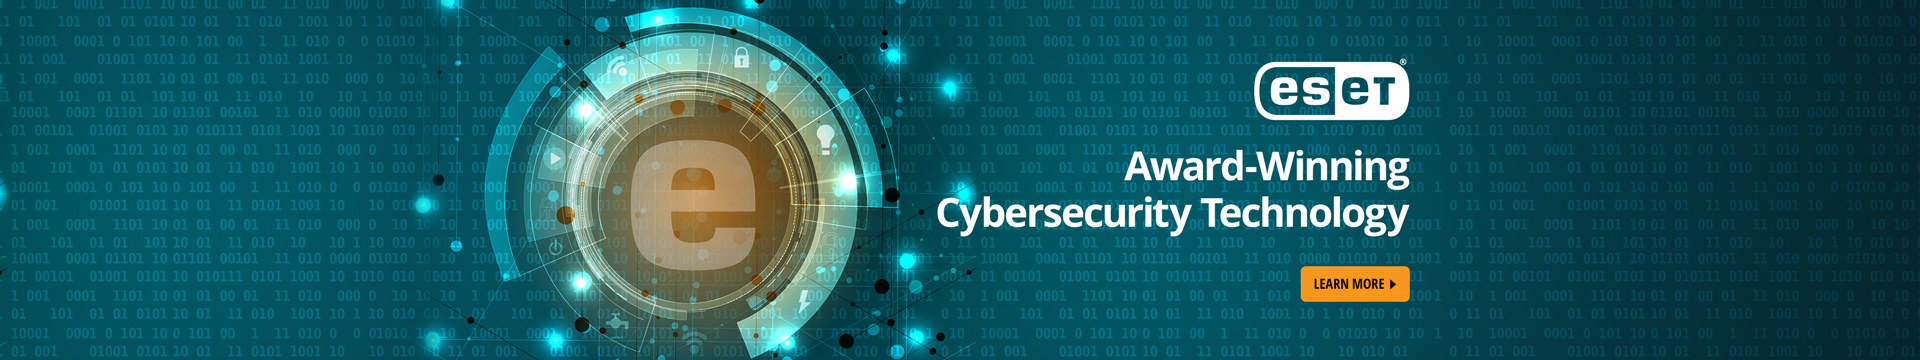 Award-Winning Cybersecurity Technology